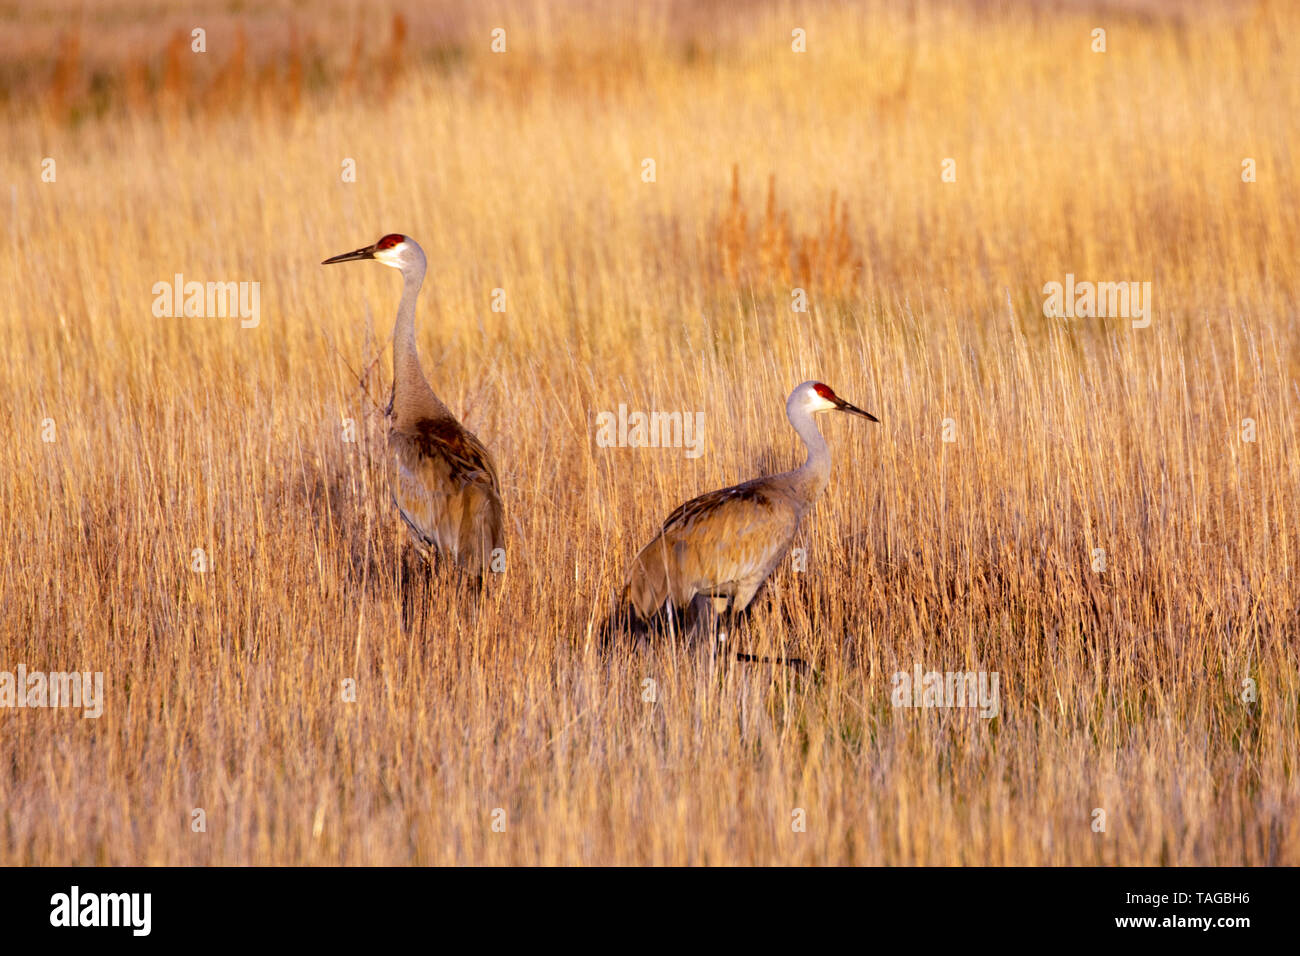 Sandhill crane, Camas National Wildlife Refuge, Idaho Stock Photo